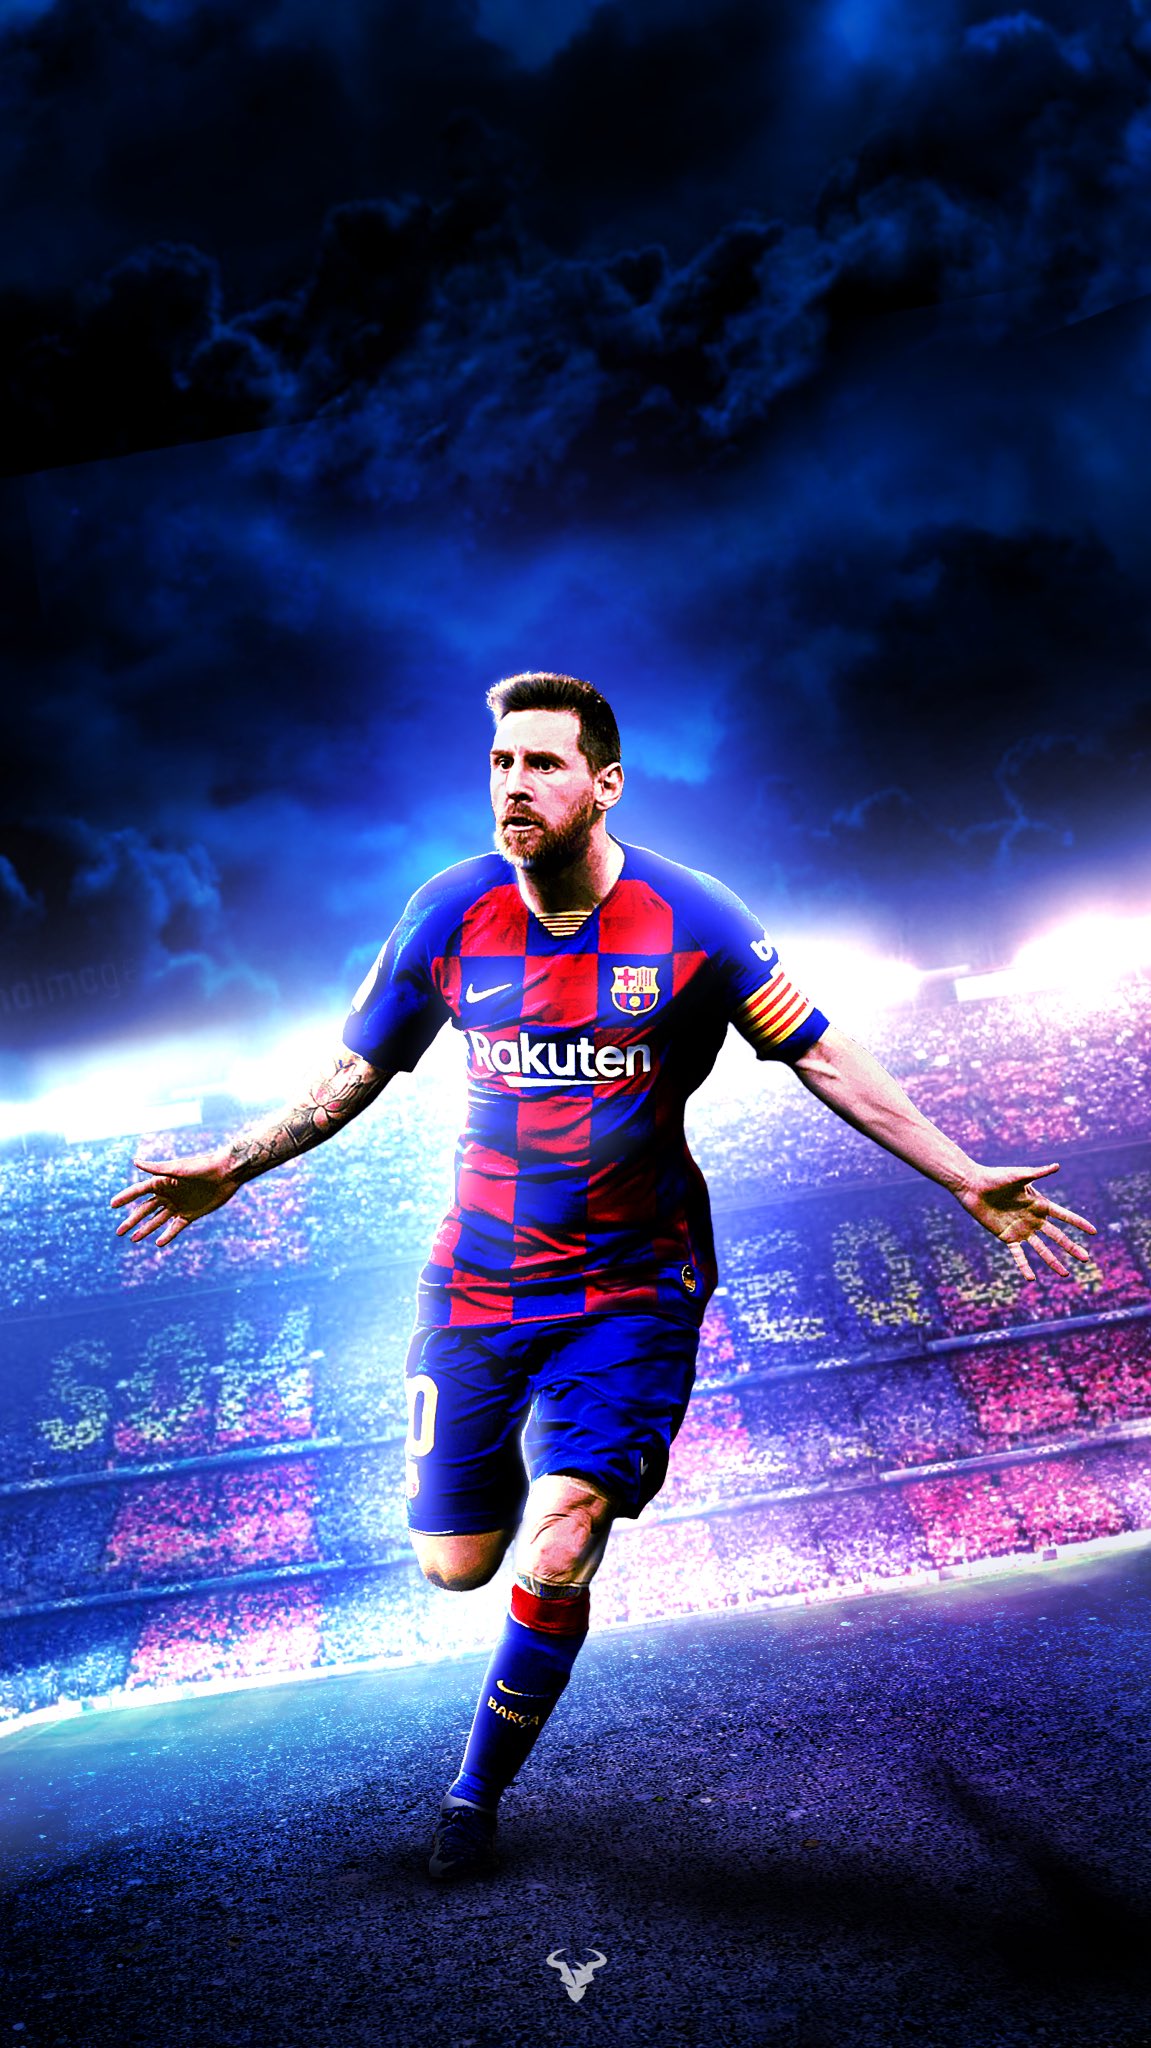 Yoshi Lionel Messi リオネル メッシ Barcelona Rt いいね お願いします Lionel Messi Leo Barcelona サッカー壁紙 T Co Wvclvcdd1s Twitter